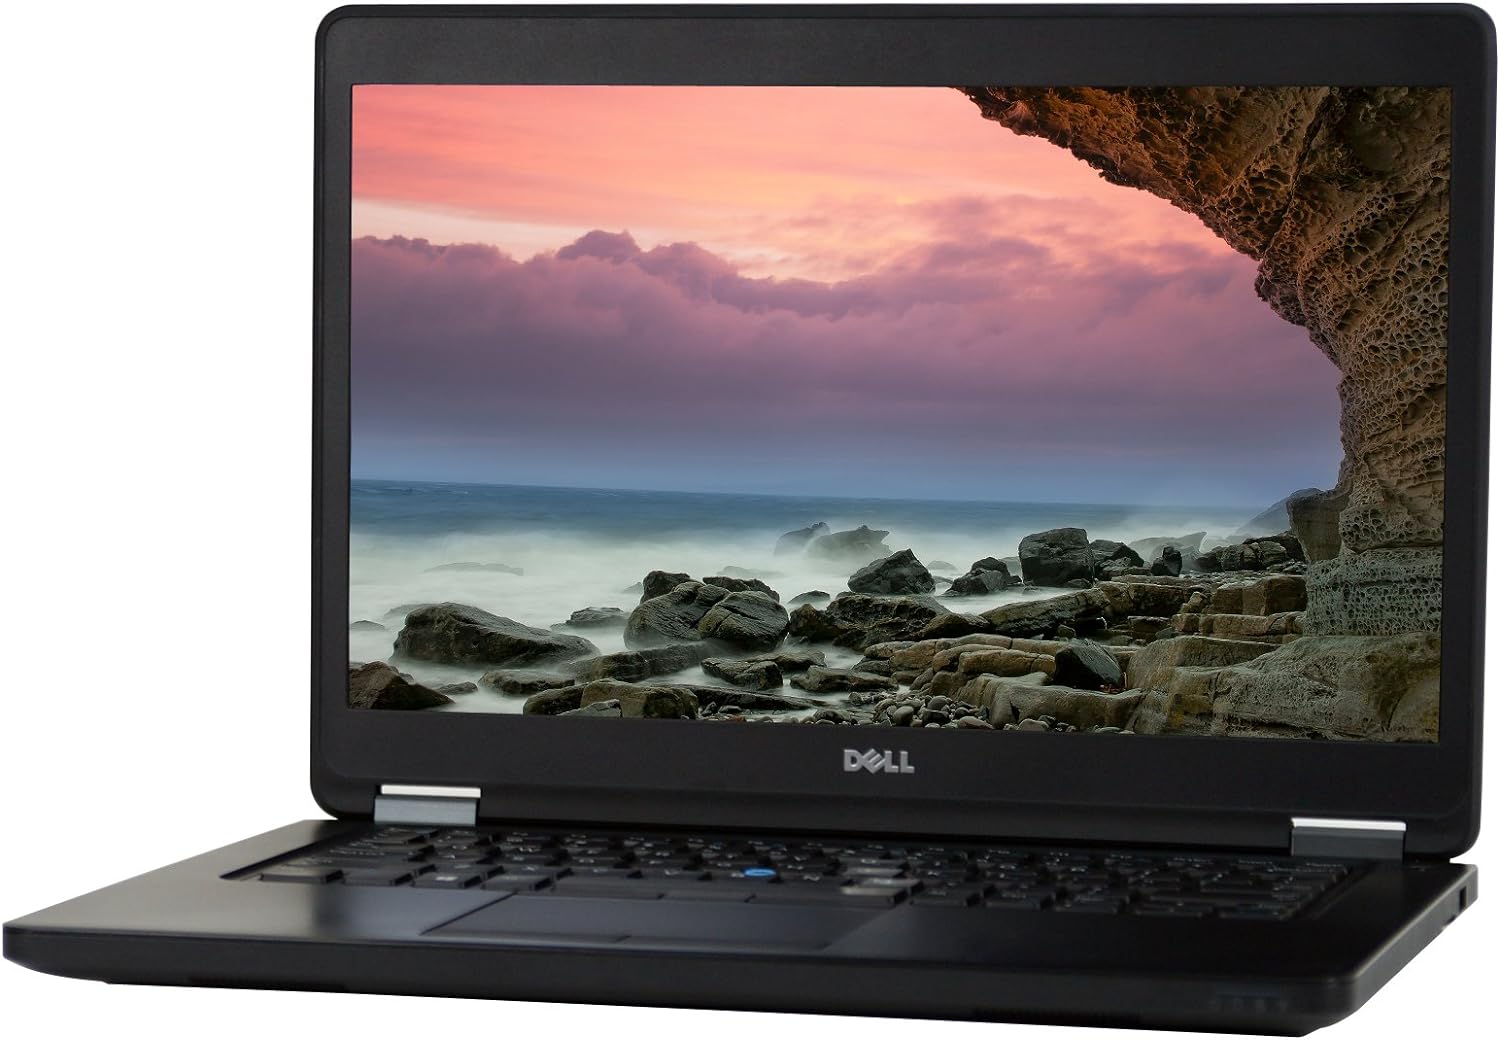 Refurbished Dell Latitude E5450 Laptop Computer Intel Core i5, 16GB Ram, 500GB Hard Drive, Windows 10 with 1 Year Warranty